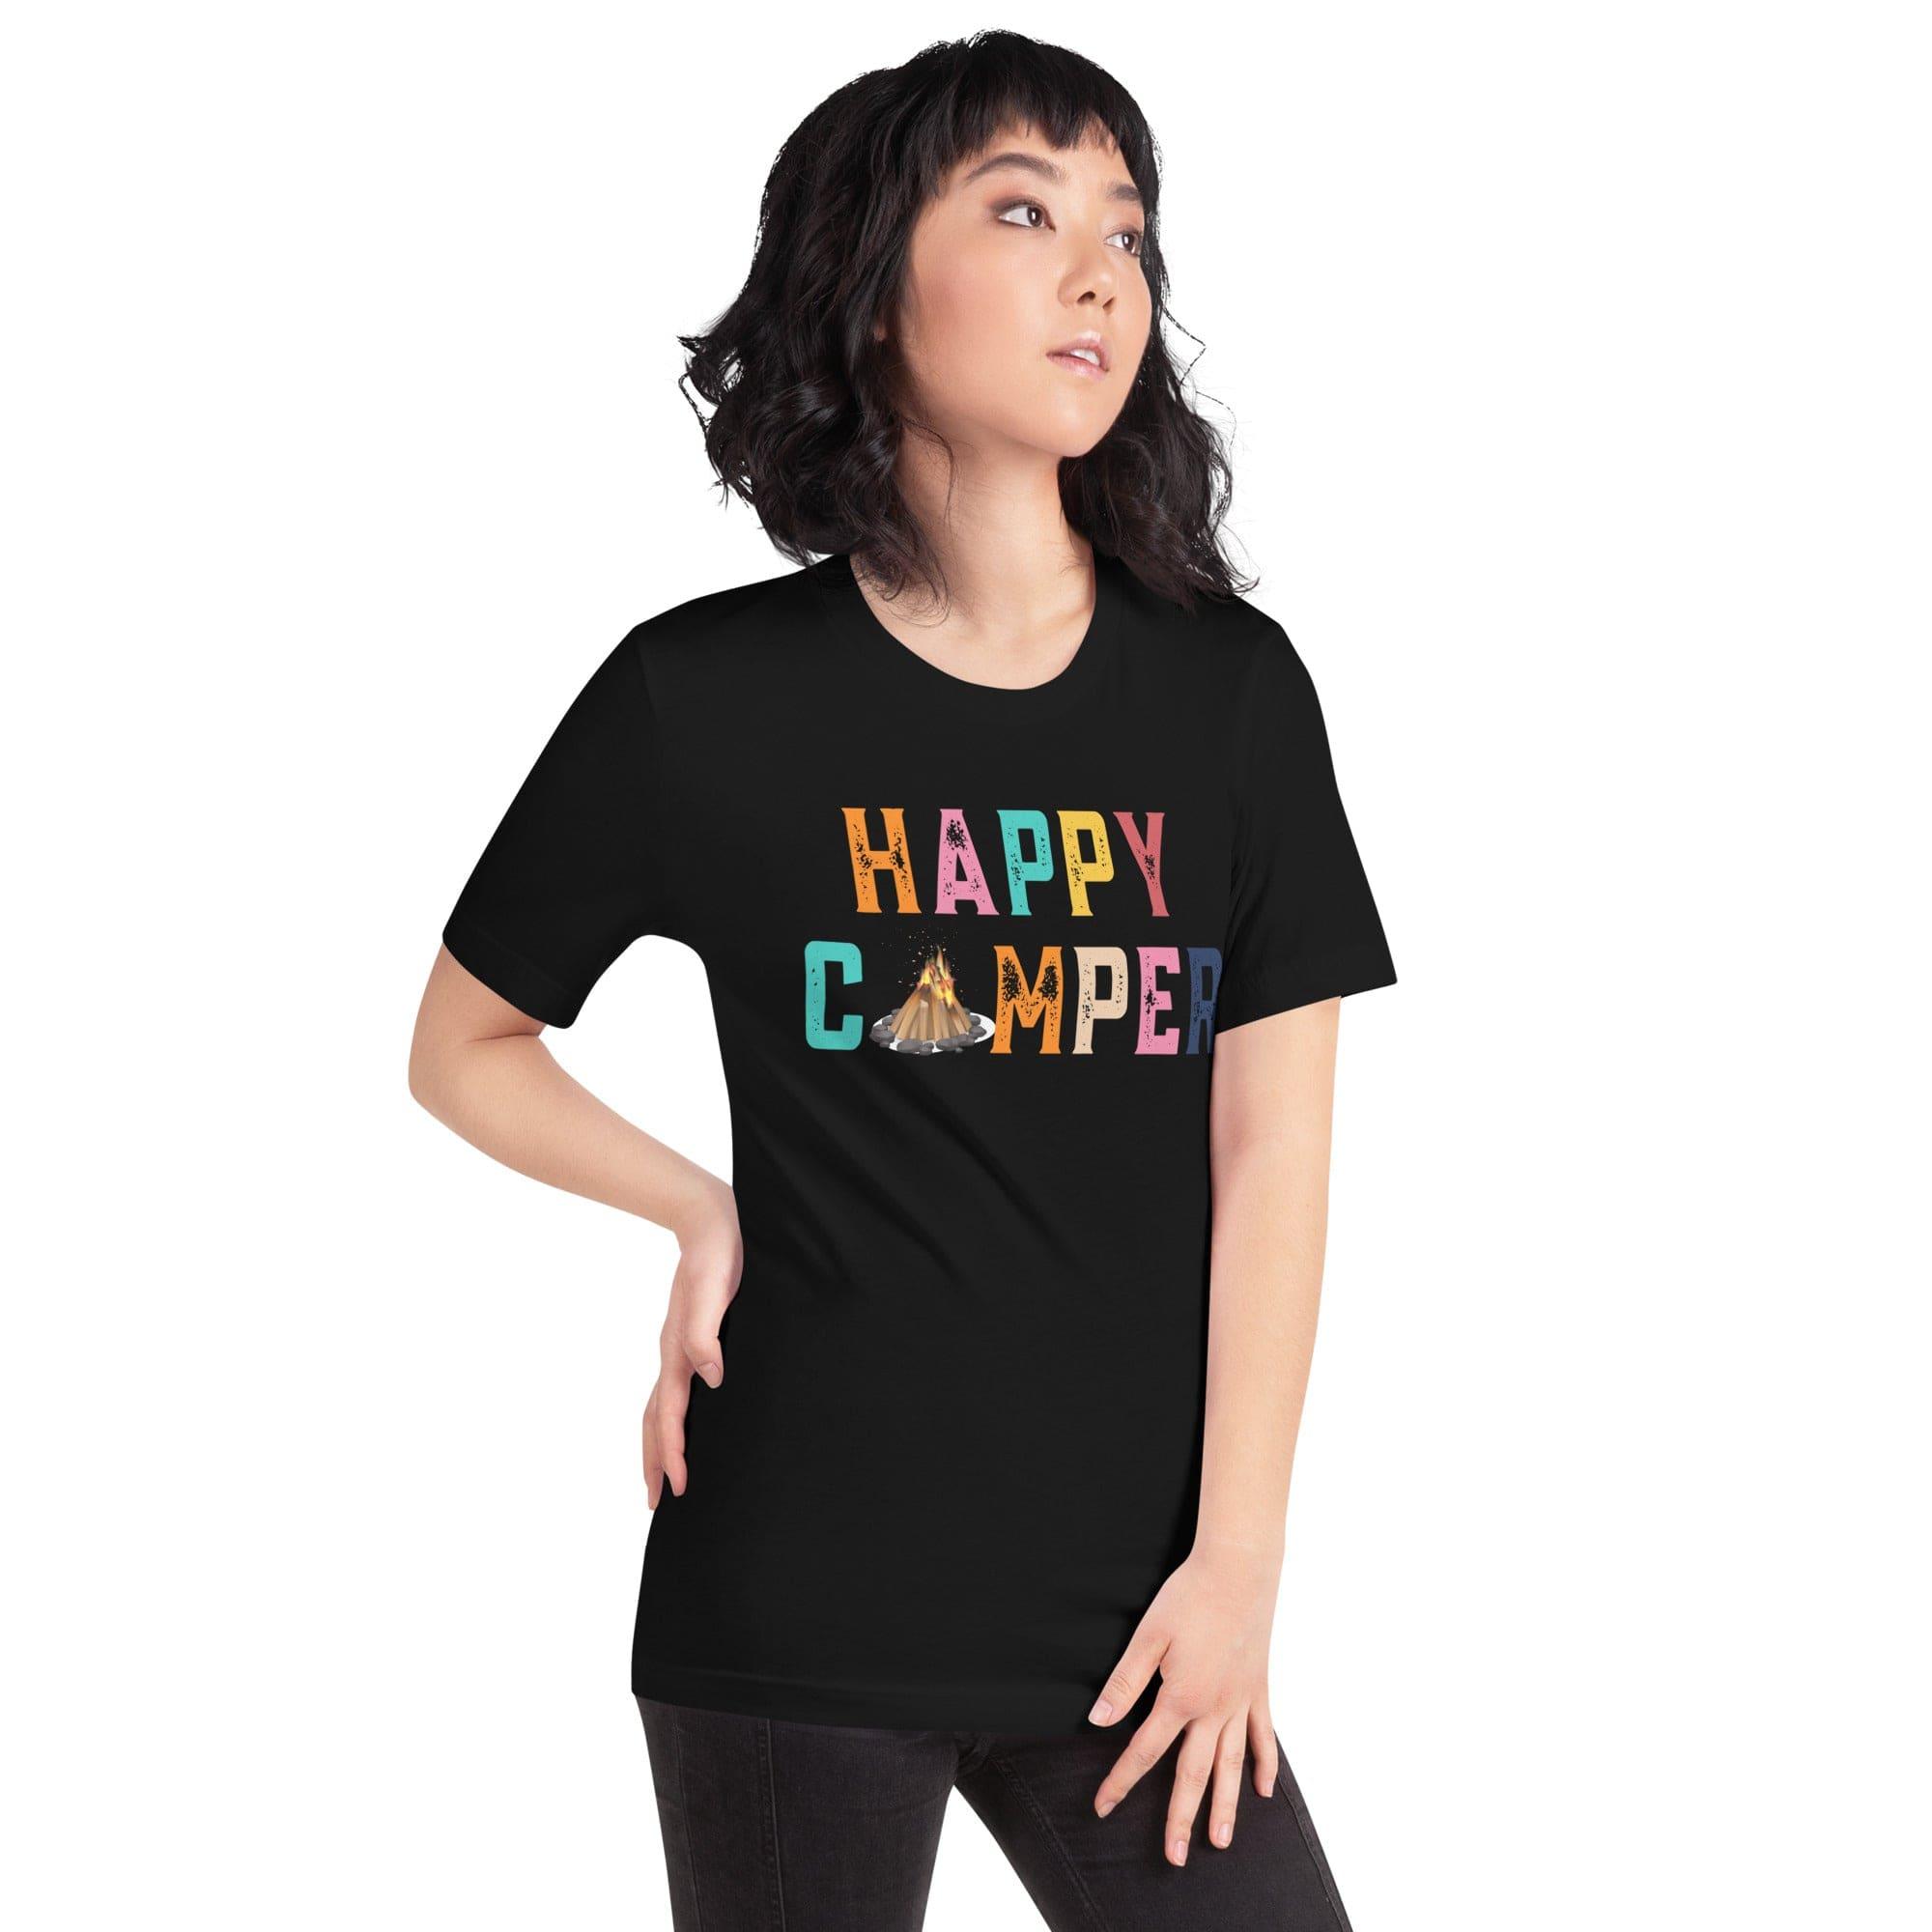 Outdoors T-Shirt Happy Camper Short Sleeve Unisex Top - TopKoalaTee